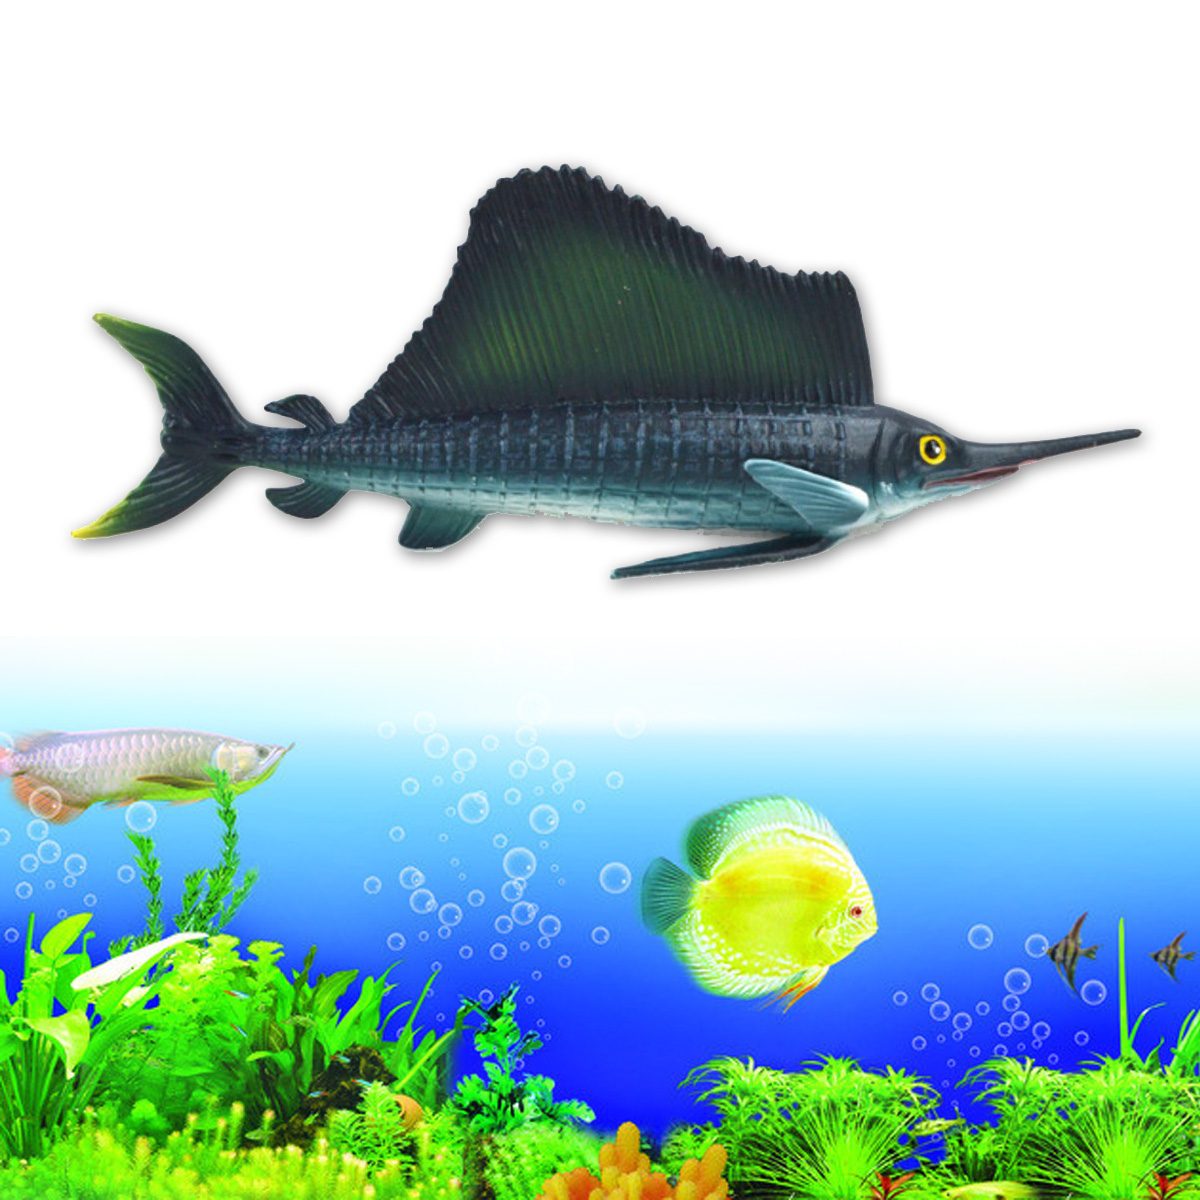 21cm-Sailfish-Realistic-Sea-Animal-Model-Solid-Plastic-Figure-Diecast-Model-Ocean-Toy-1324070